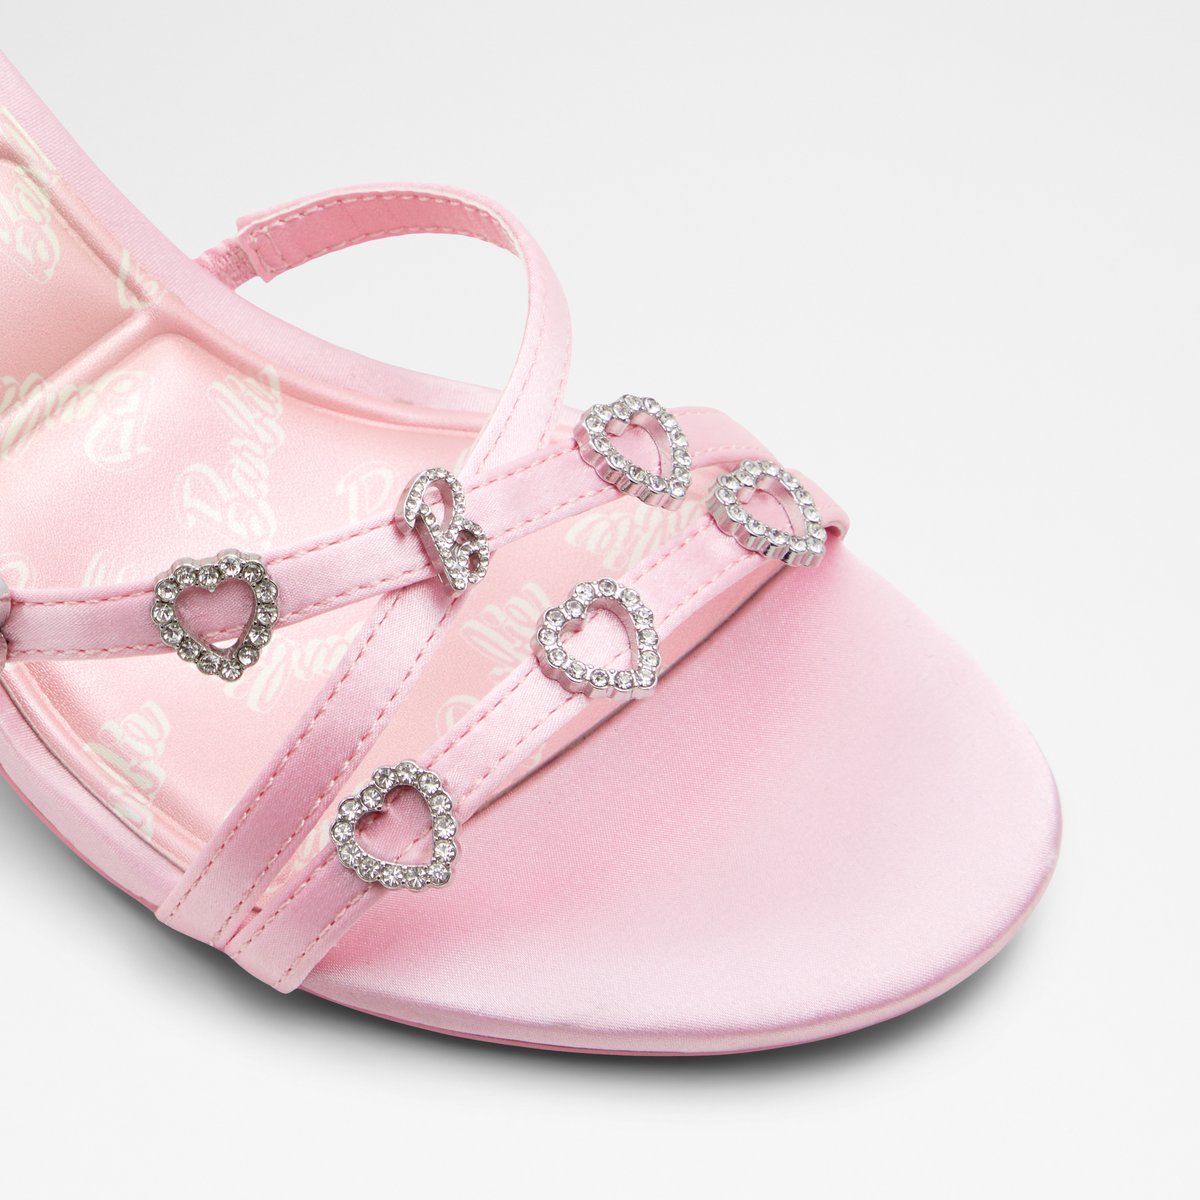 Barbiemule Women Shoes - Medium Pink - ALDO KSA